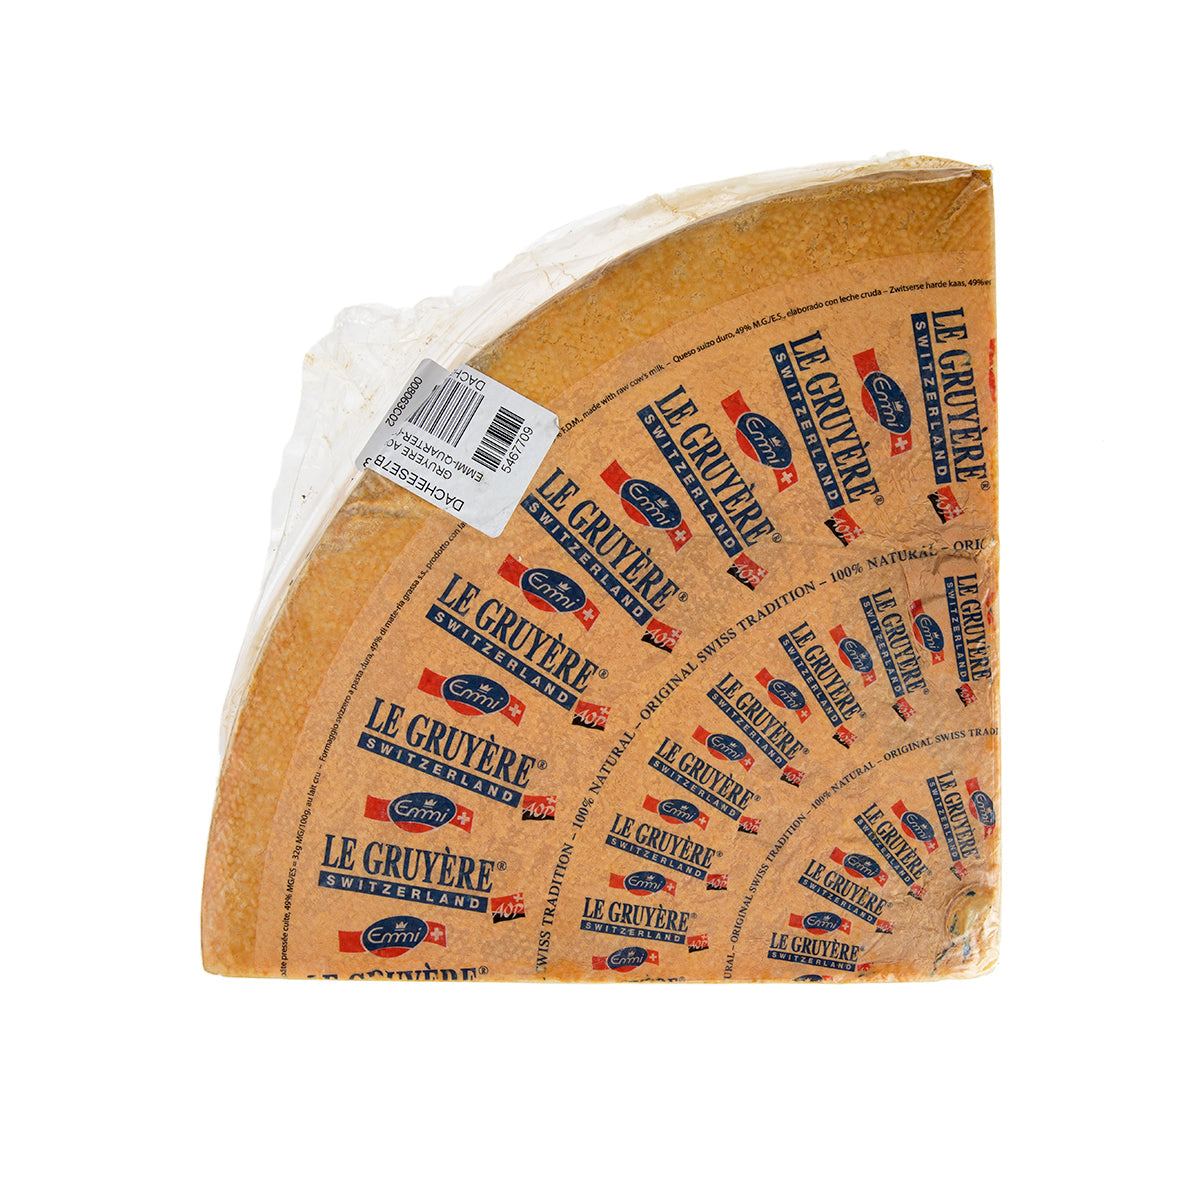 Emmi Roth Gruyere Quarter Wheel Cheese